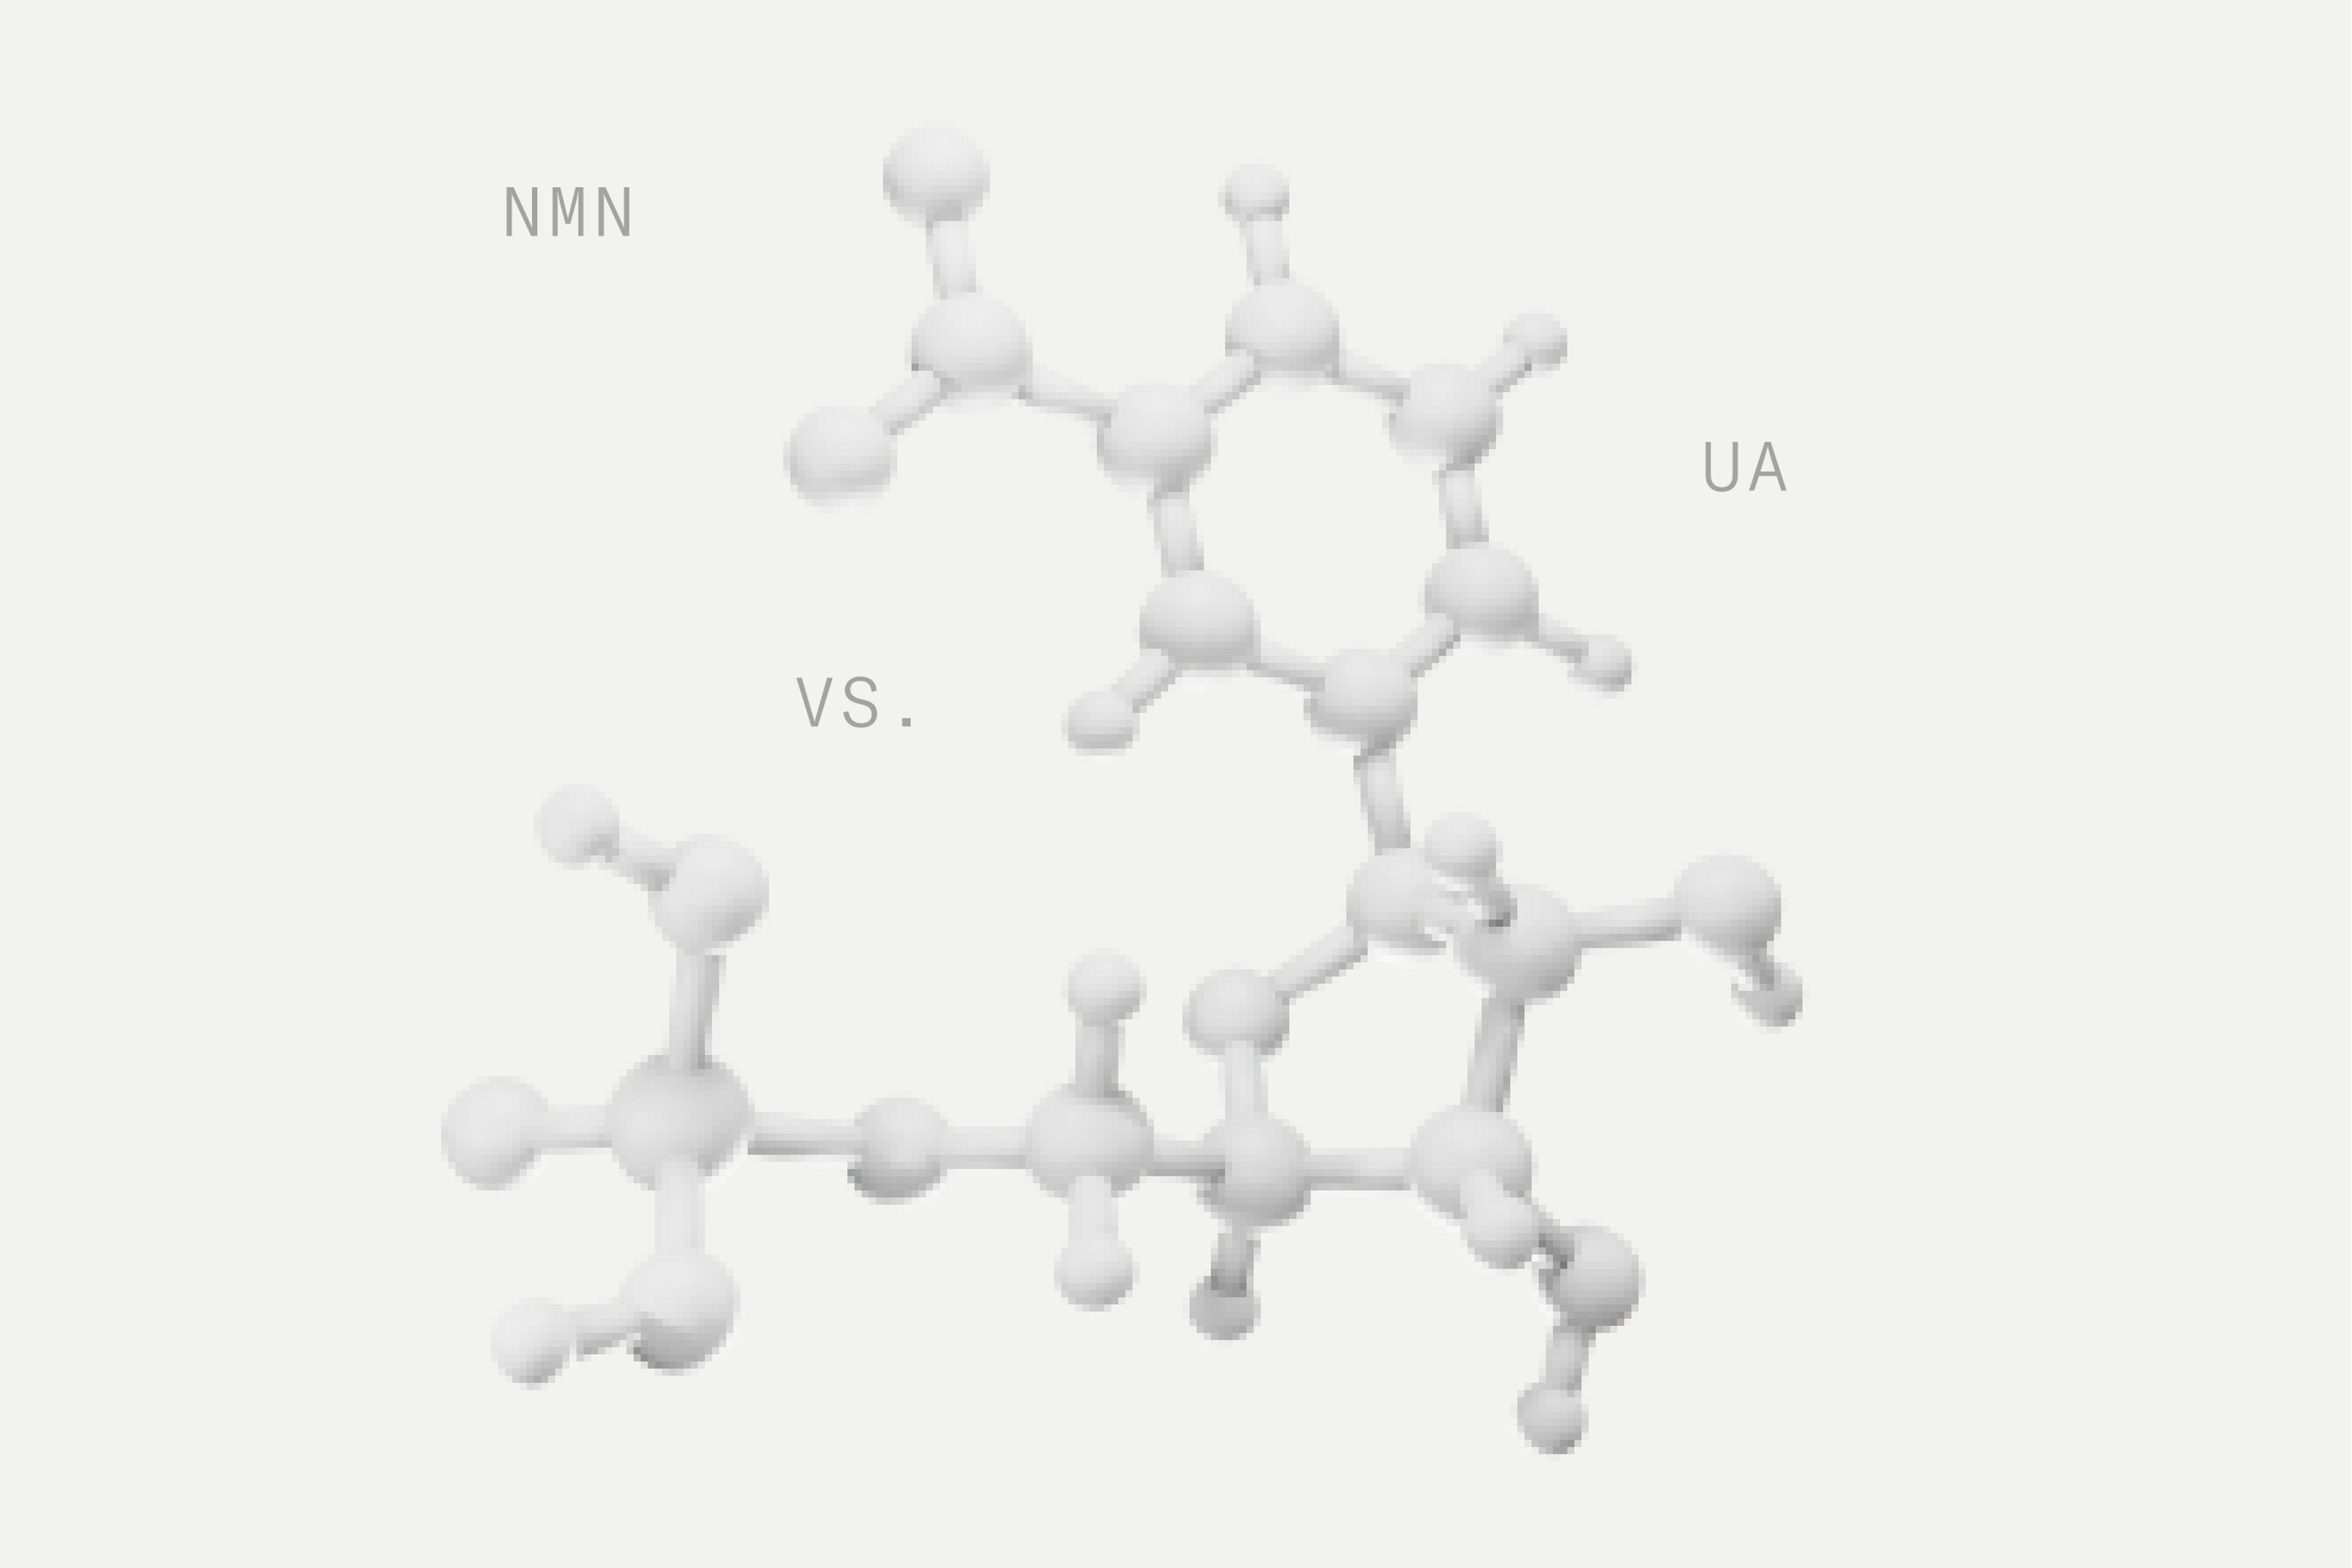 NMN vs Urolithin A